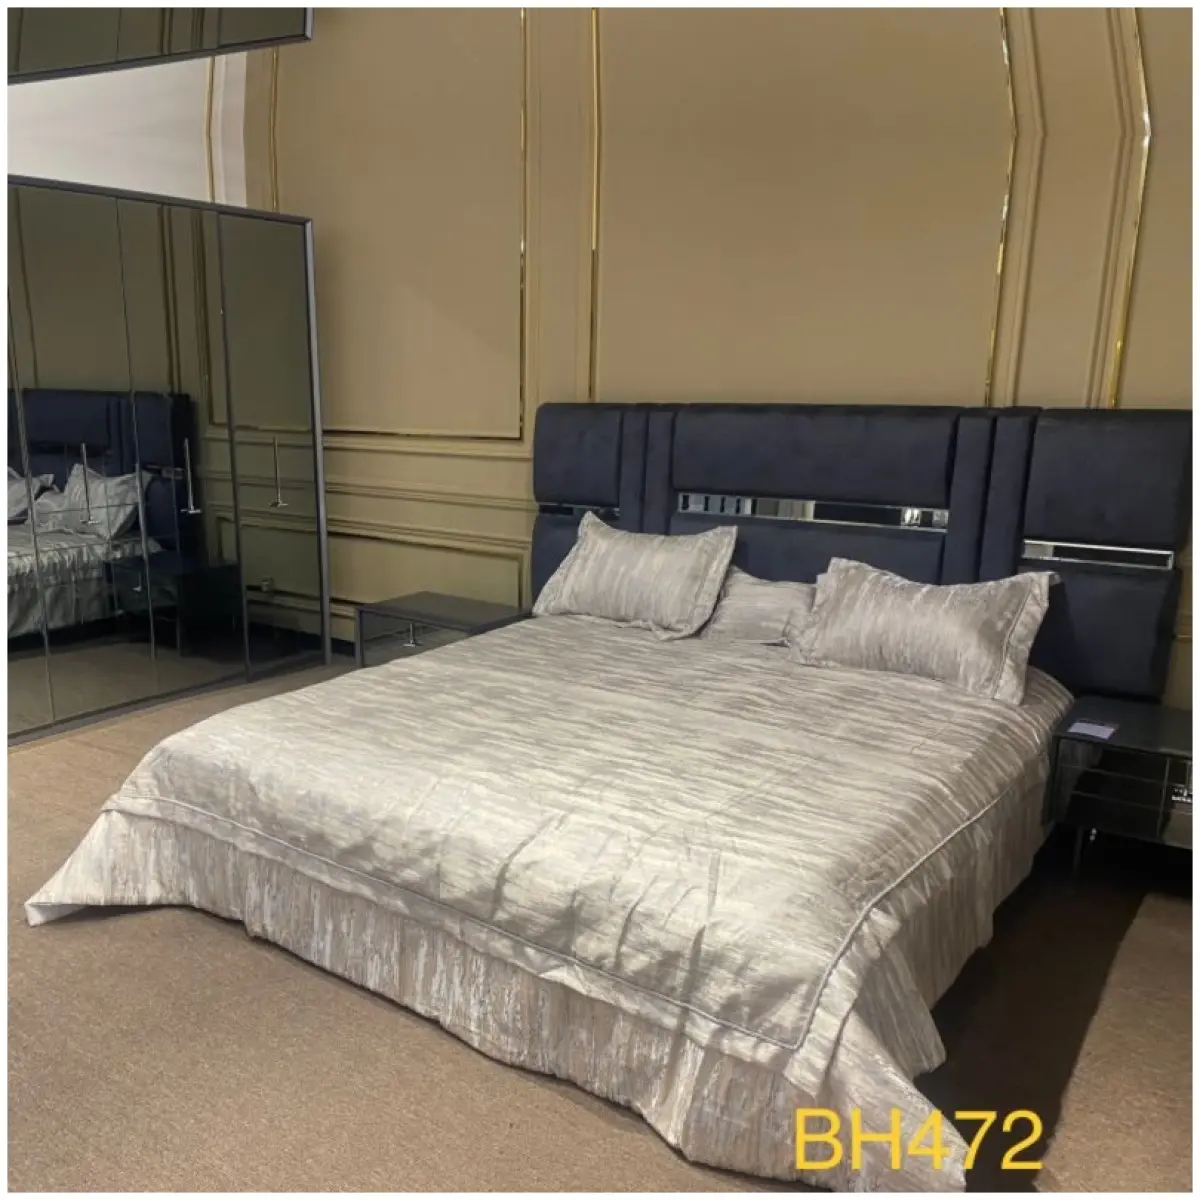 Delong Bed Sheet Set (BH471)